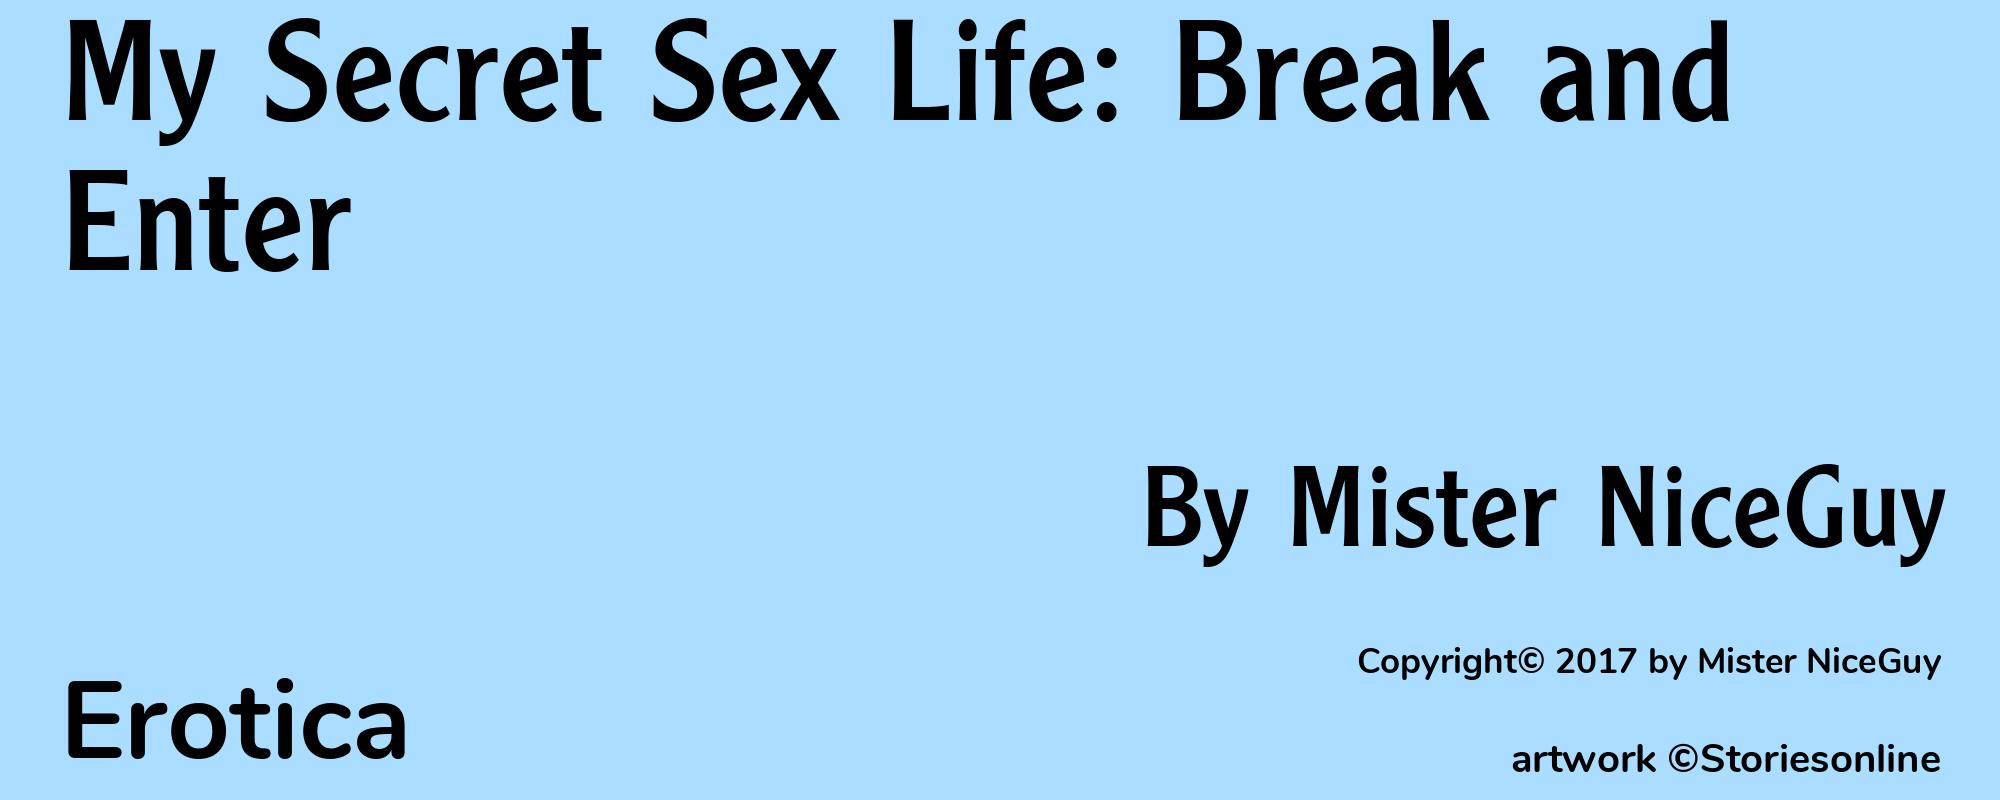 My Secret Sex Life: Break and Enter - Cover